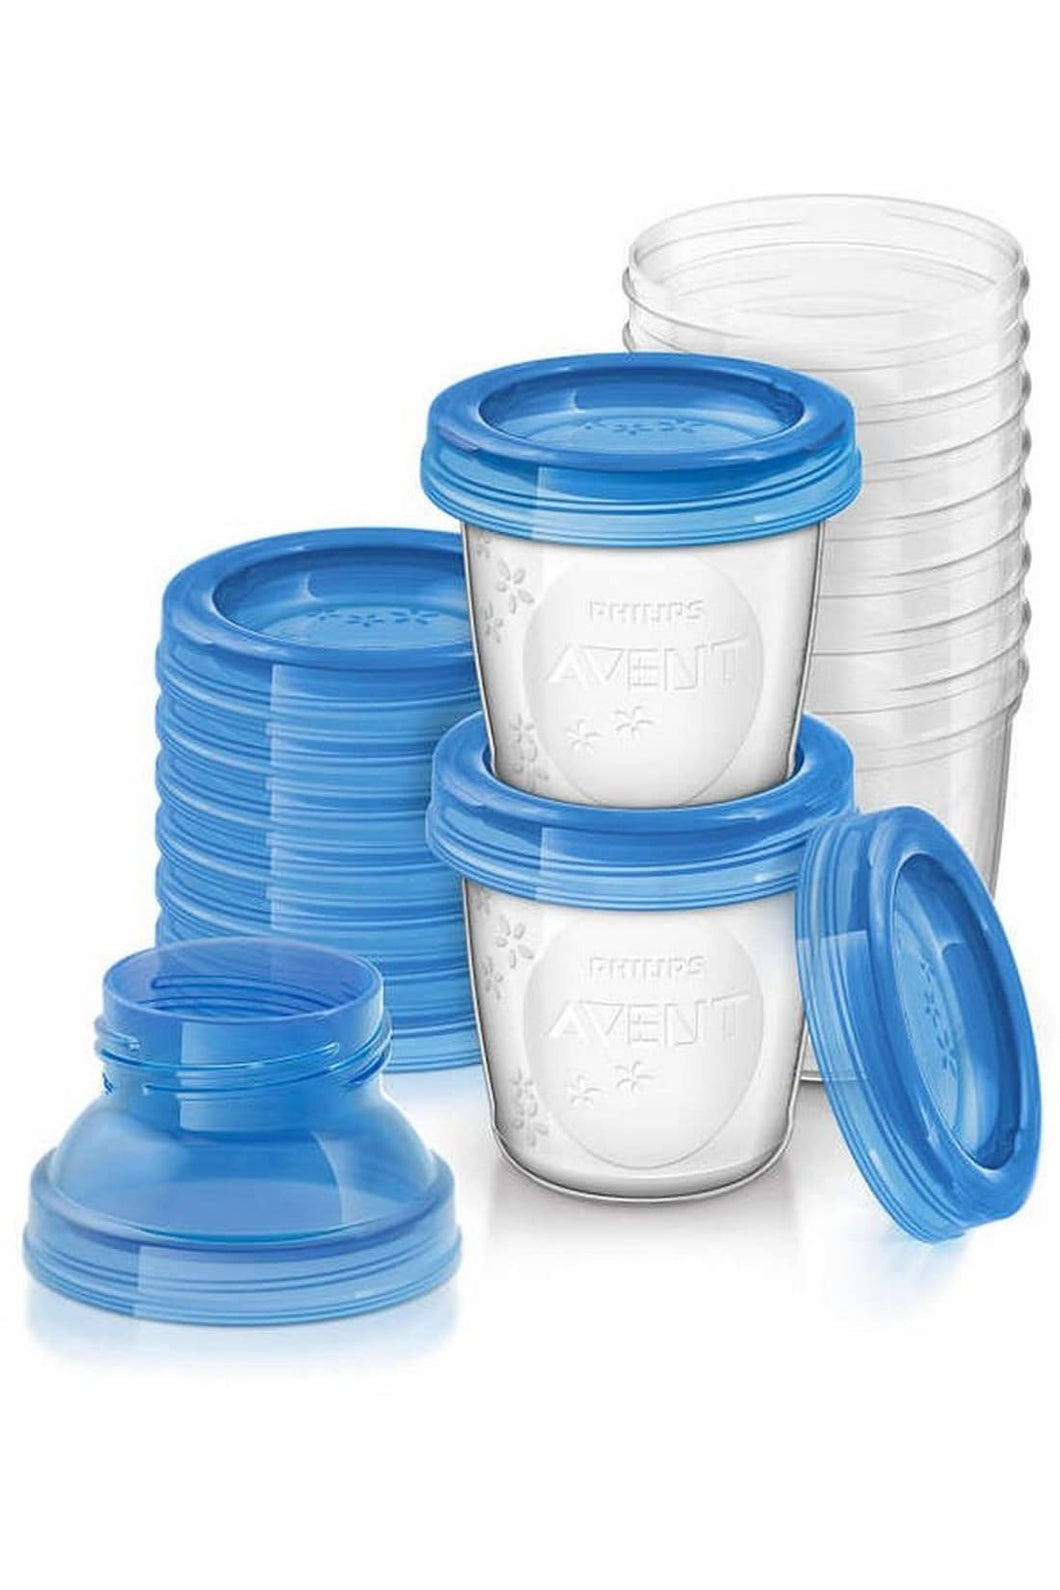 Philips Avent Breast Milk Storage Cups 10Pcs 1